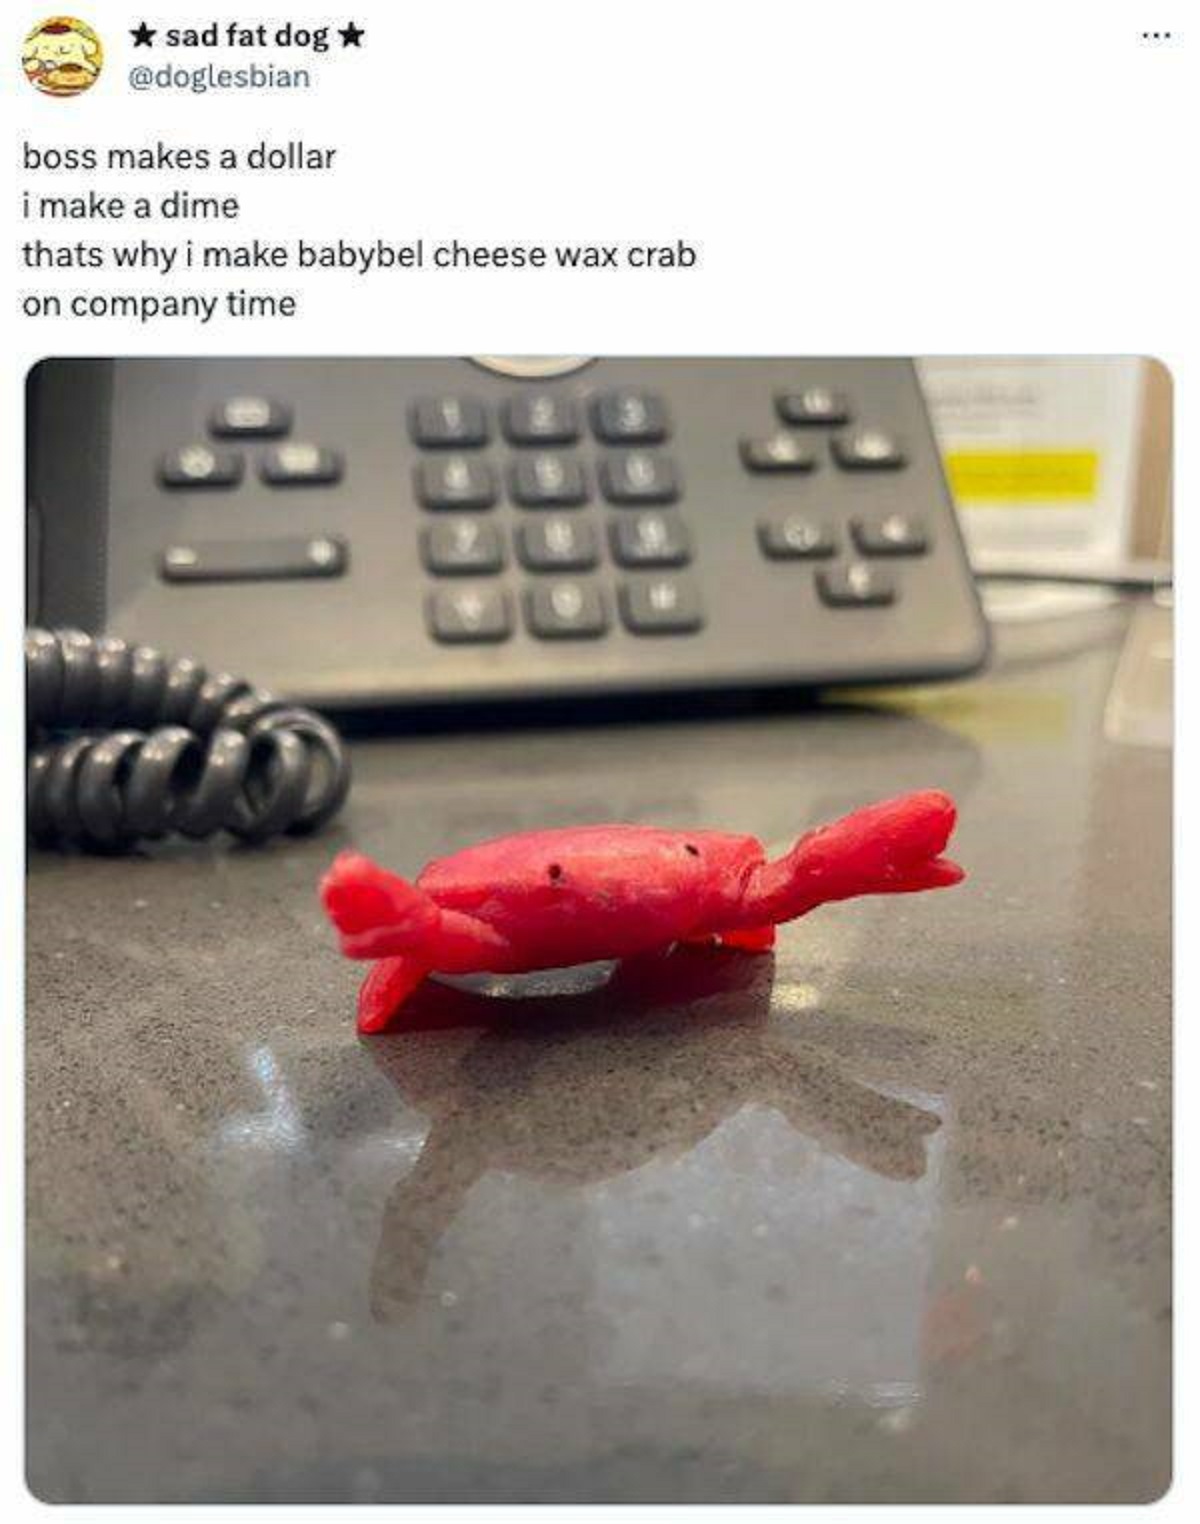 funny tweets - sad fat dog . boss makes a dollar i make a dime thats why i make babybel cheese wax crab on company time